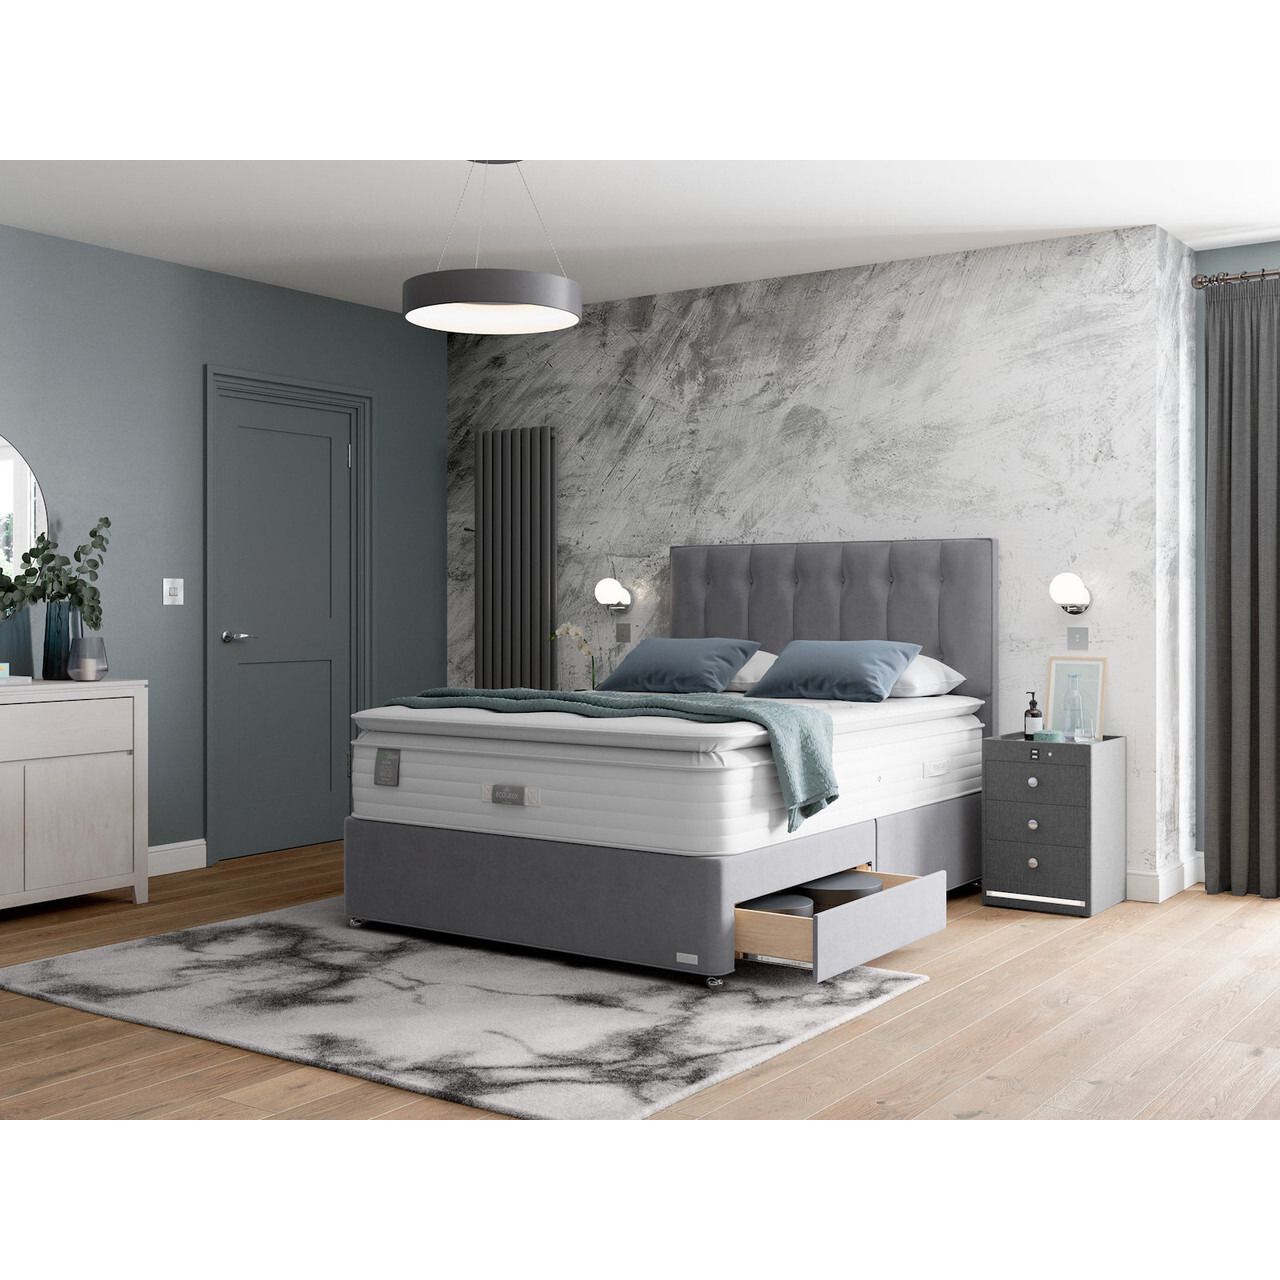 Staples & Co Renew Eco Latex Pocket 2300 Divan Bed Set - image 1